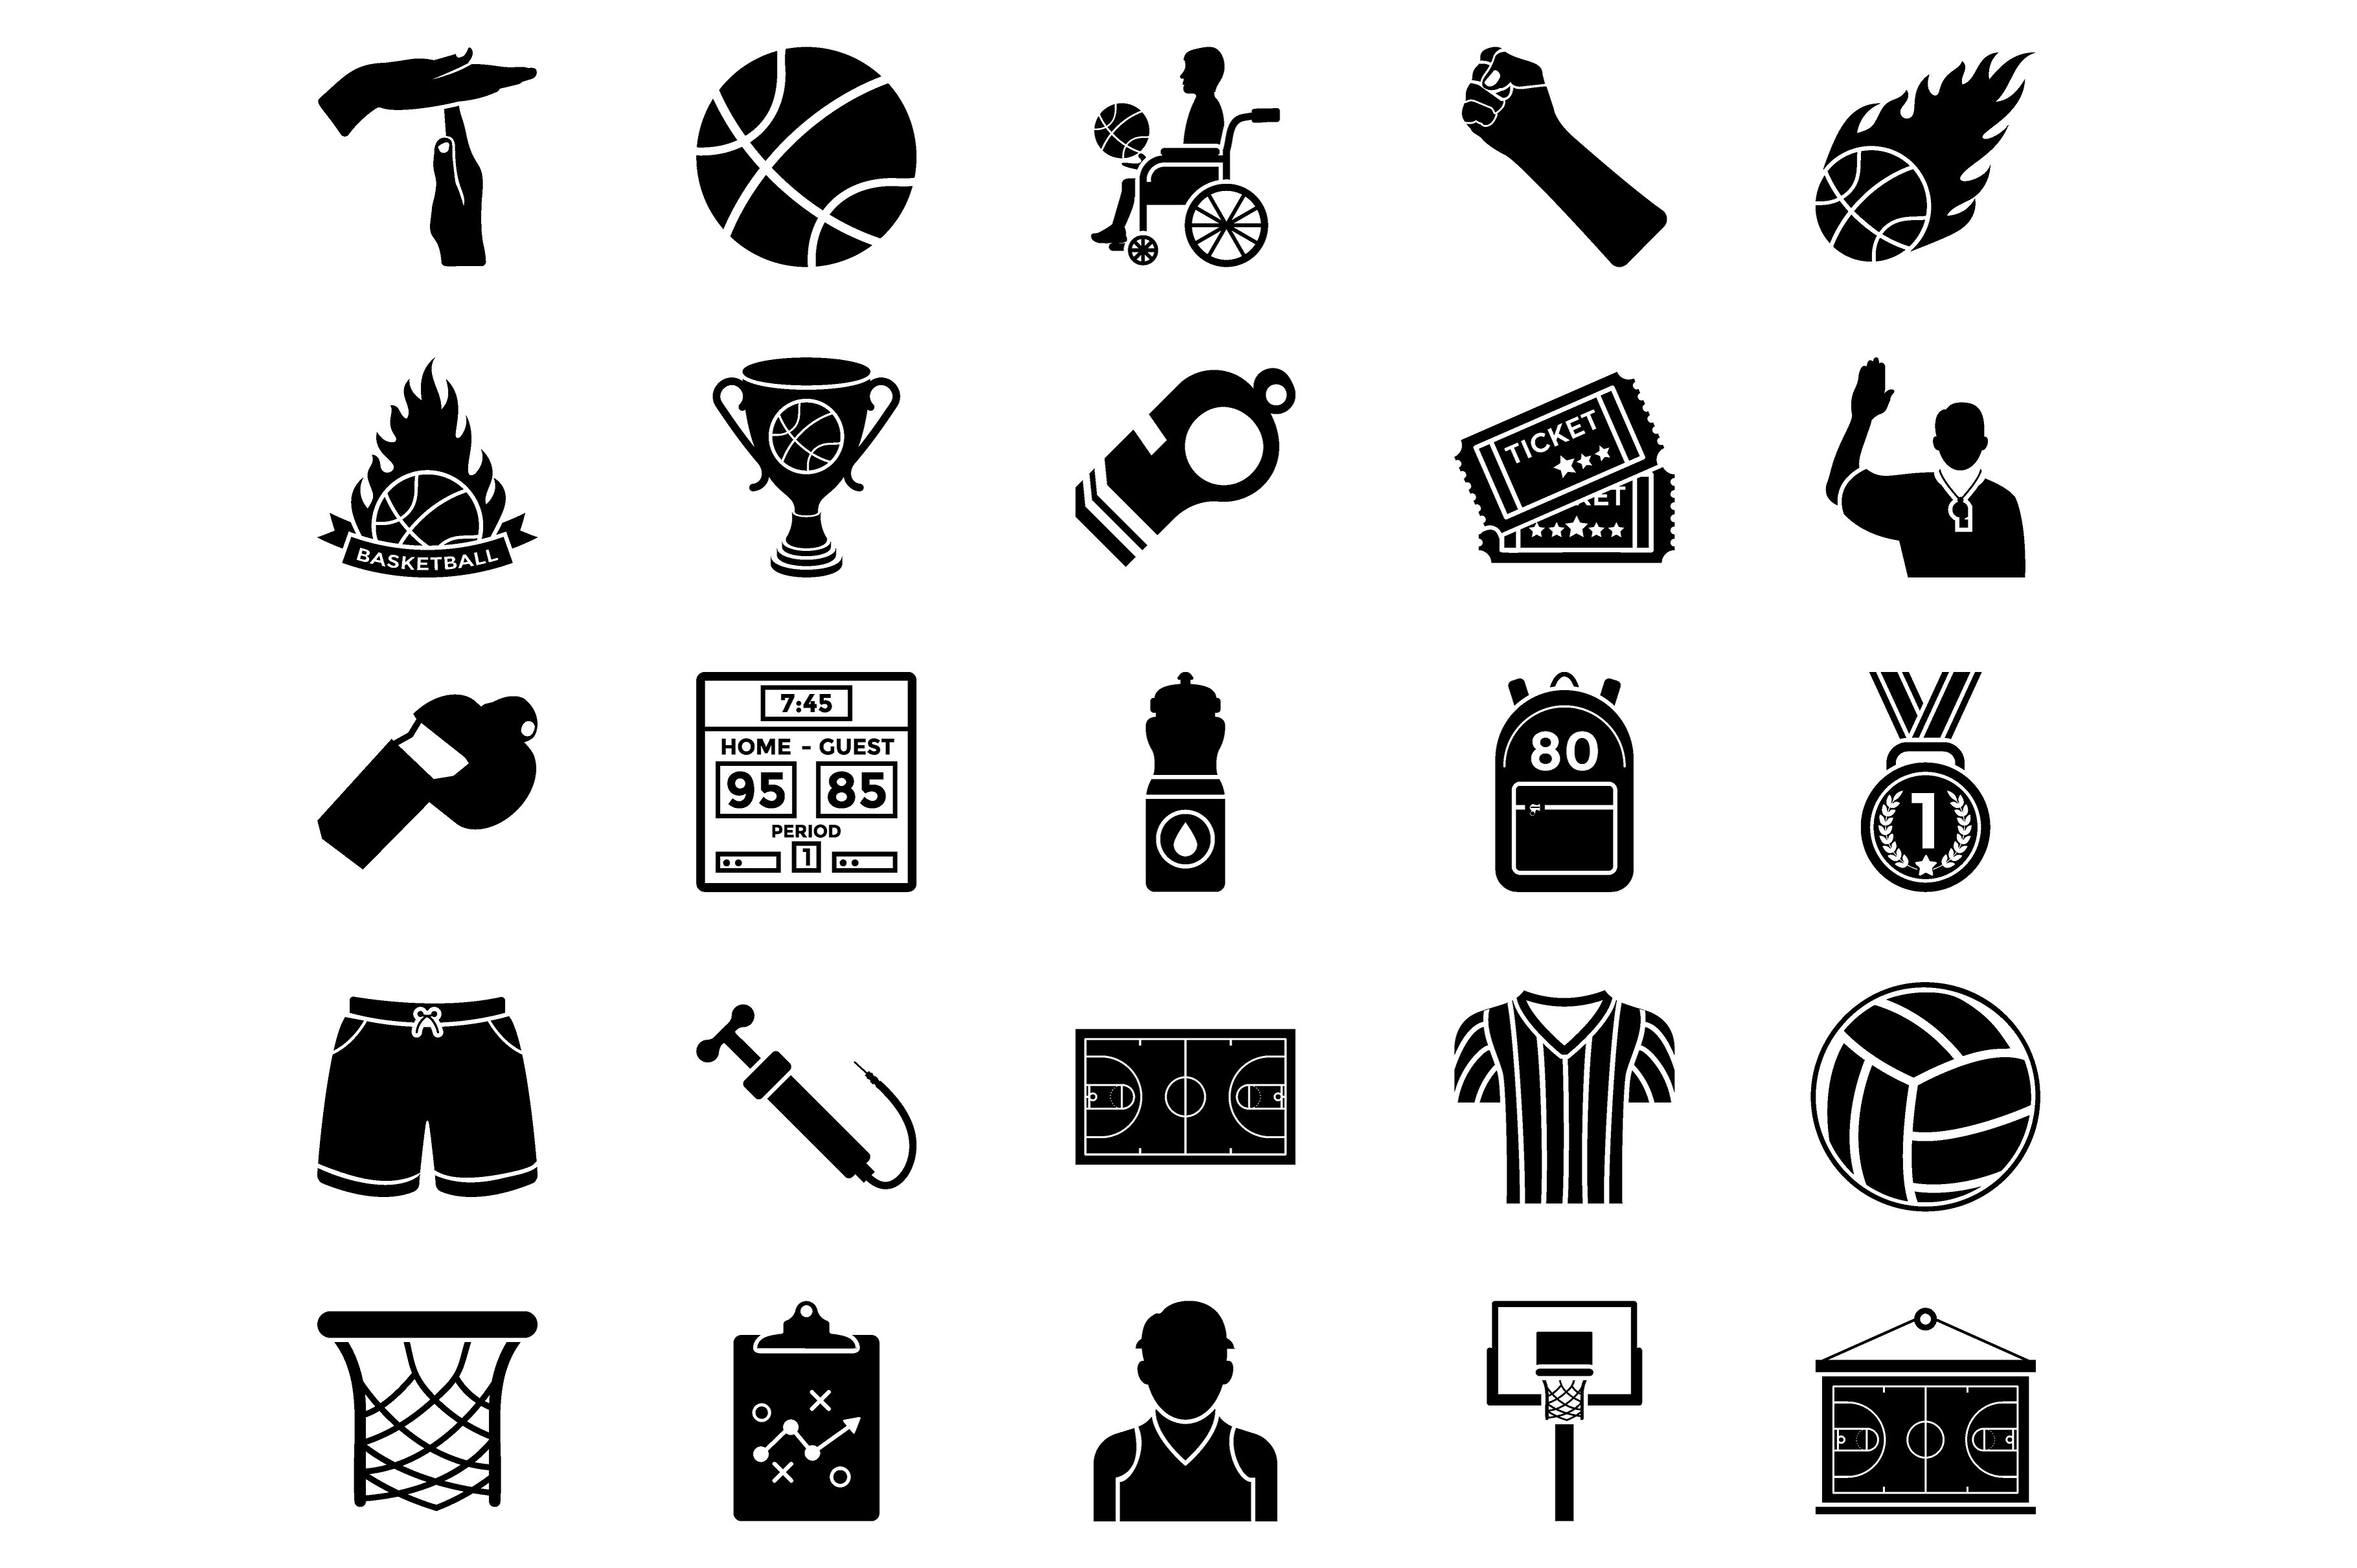 50个篮球矢量图标素材 50 basketball vector icons 云瑞设计